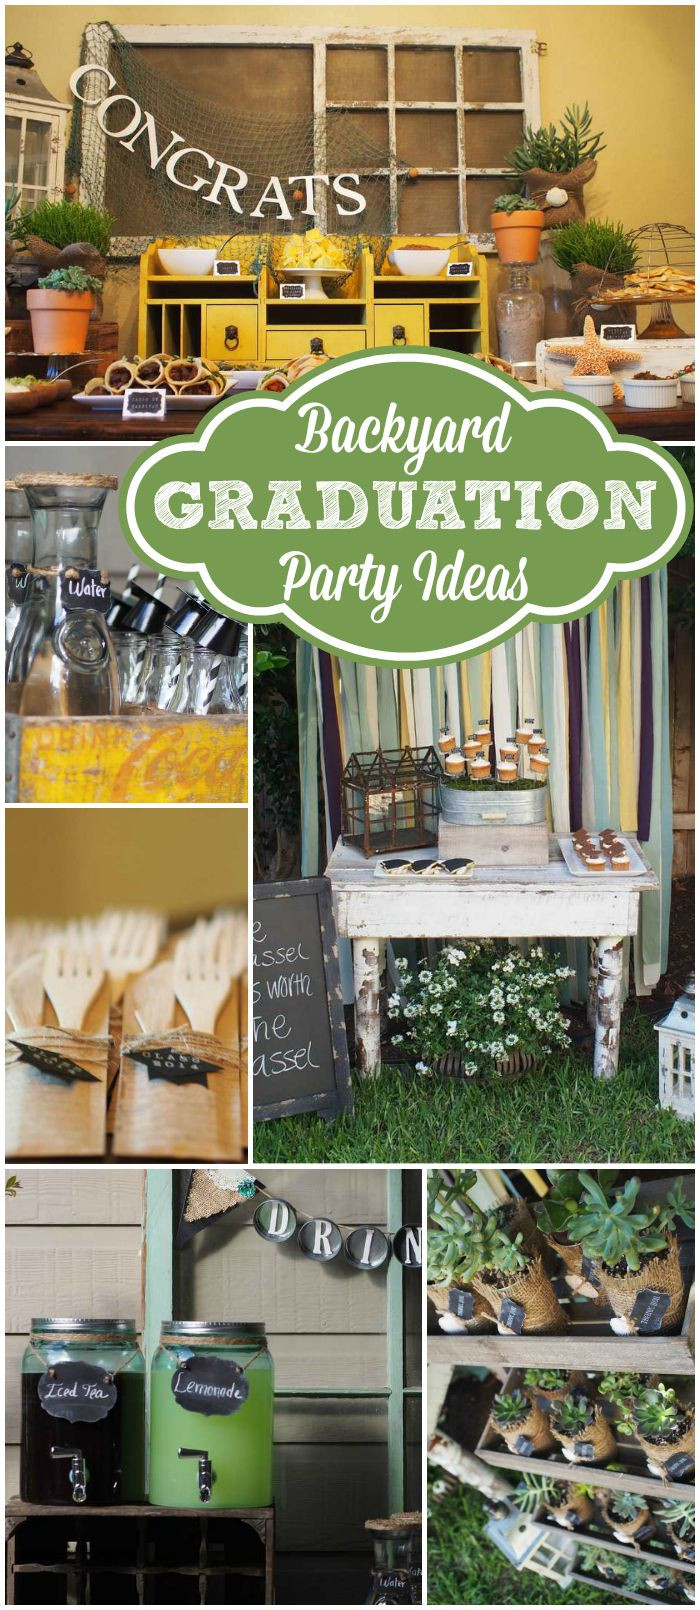 Graduation Party Ideas For College Students
 Graduation and ocean Graduation End of School "Backyard